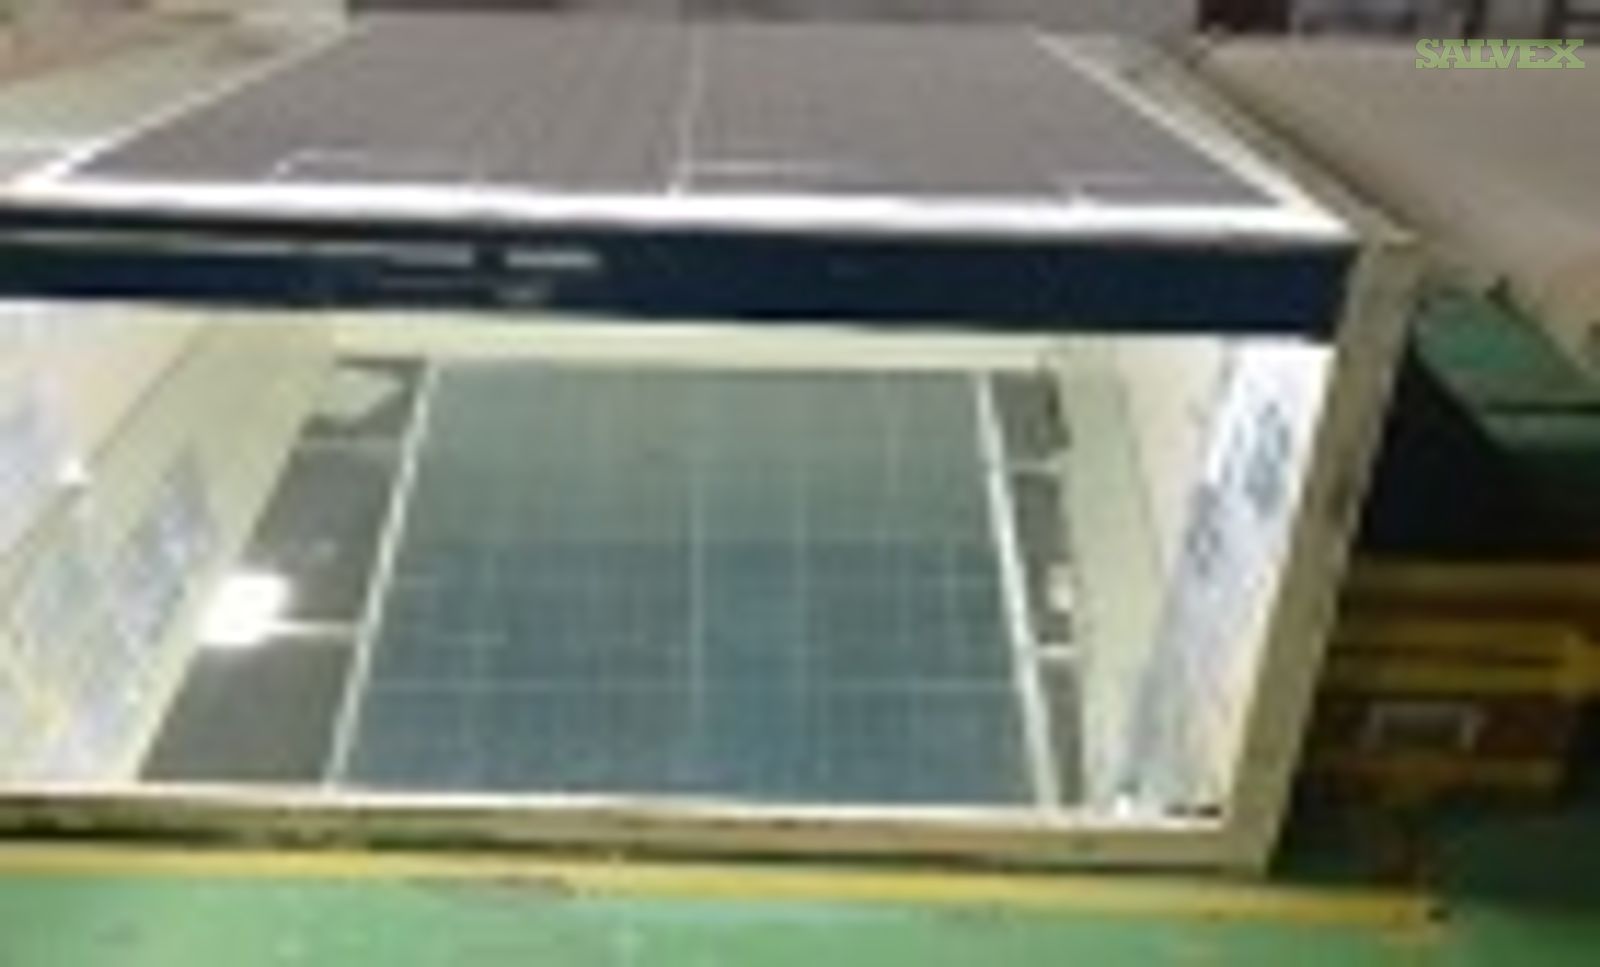 Solar Panel Manufacturing Machinery: Visual Check Equipment (1 Unit)